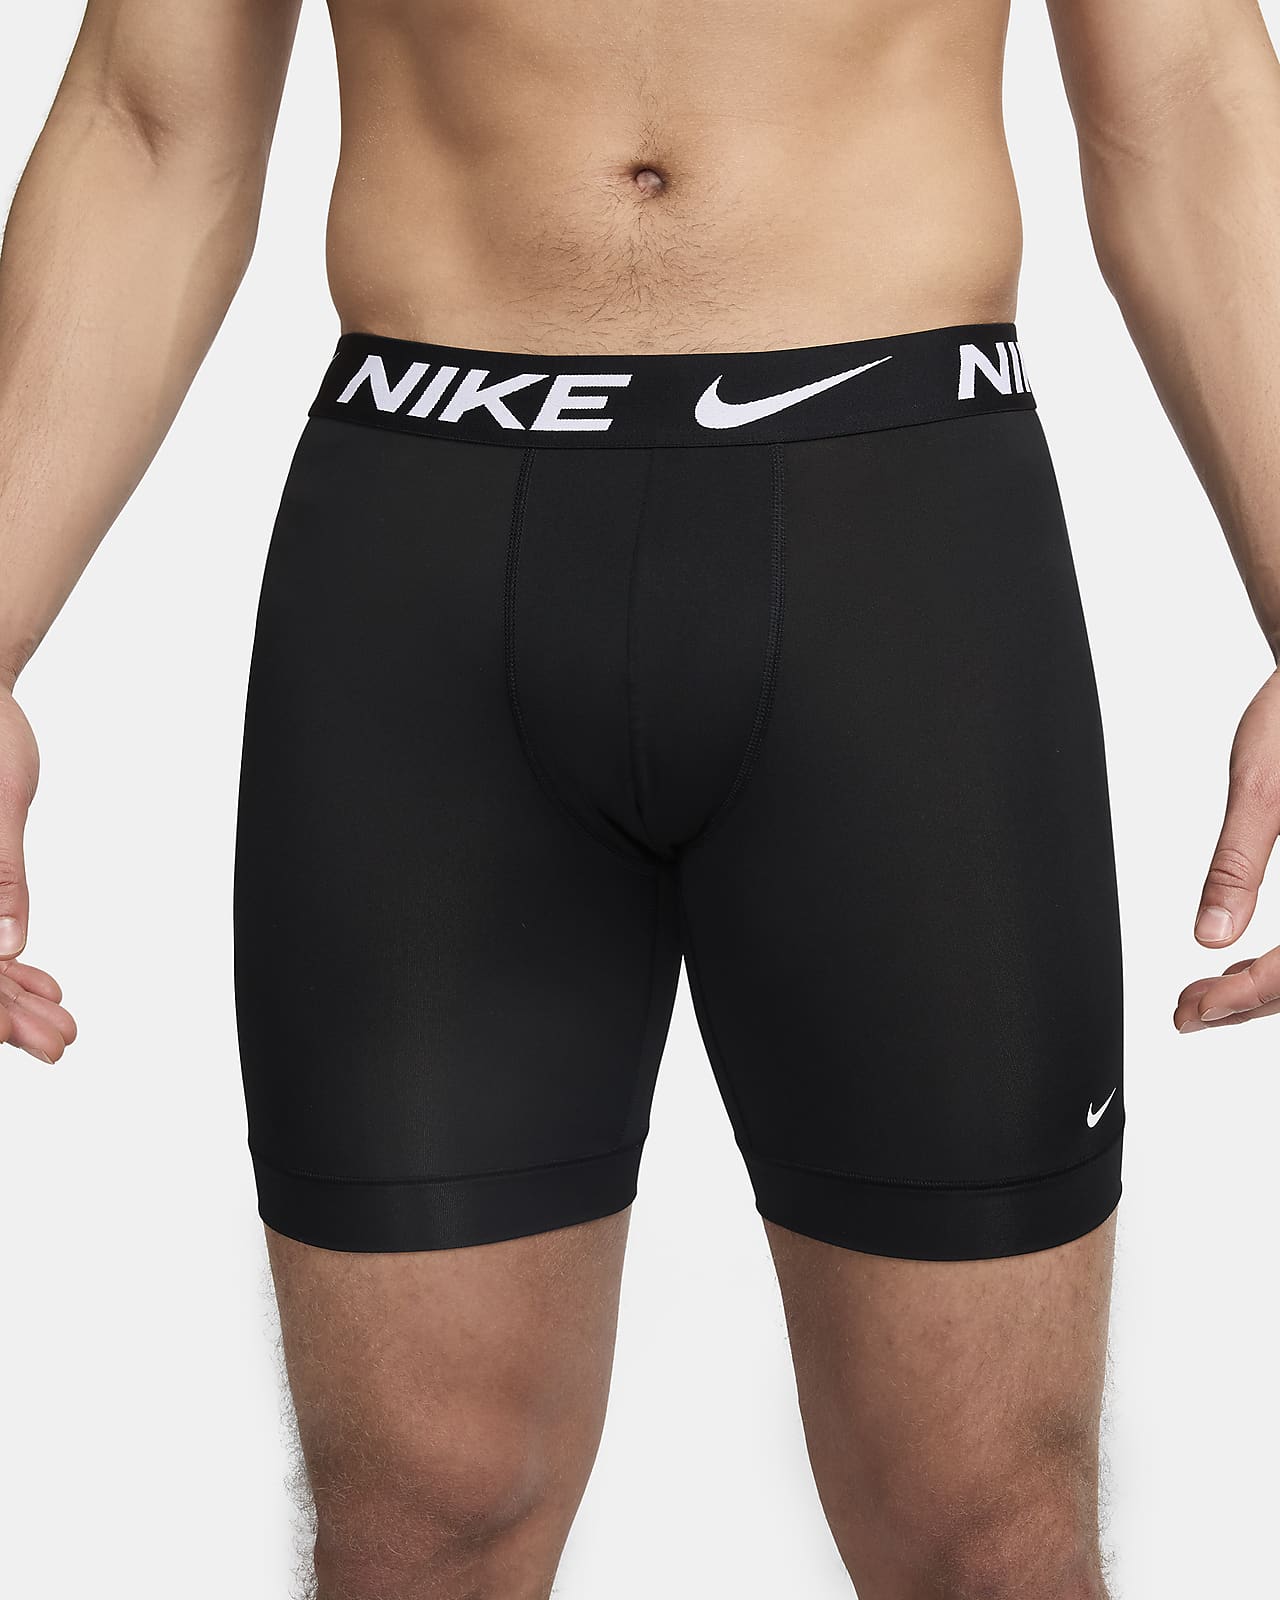 Racerback Underwear. Nike CA